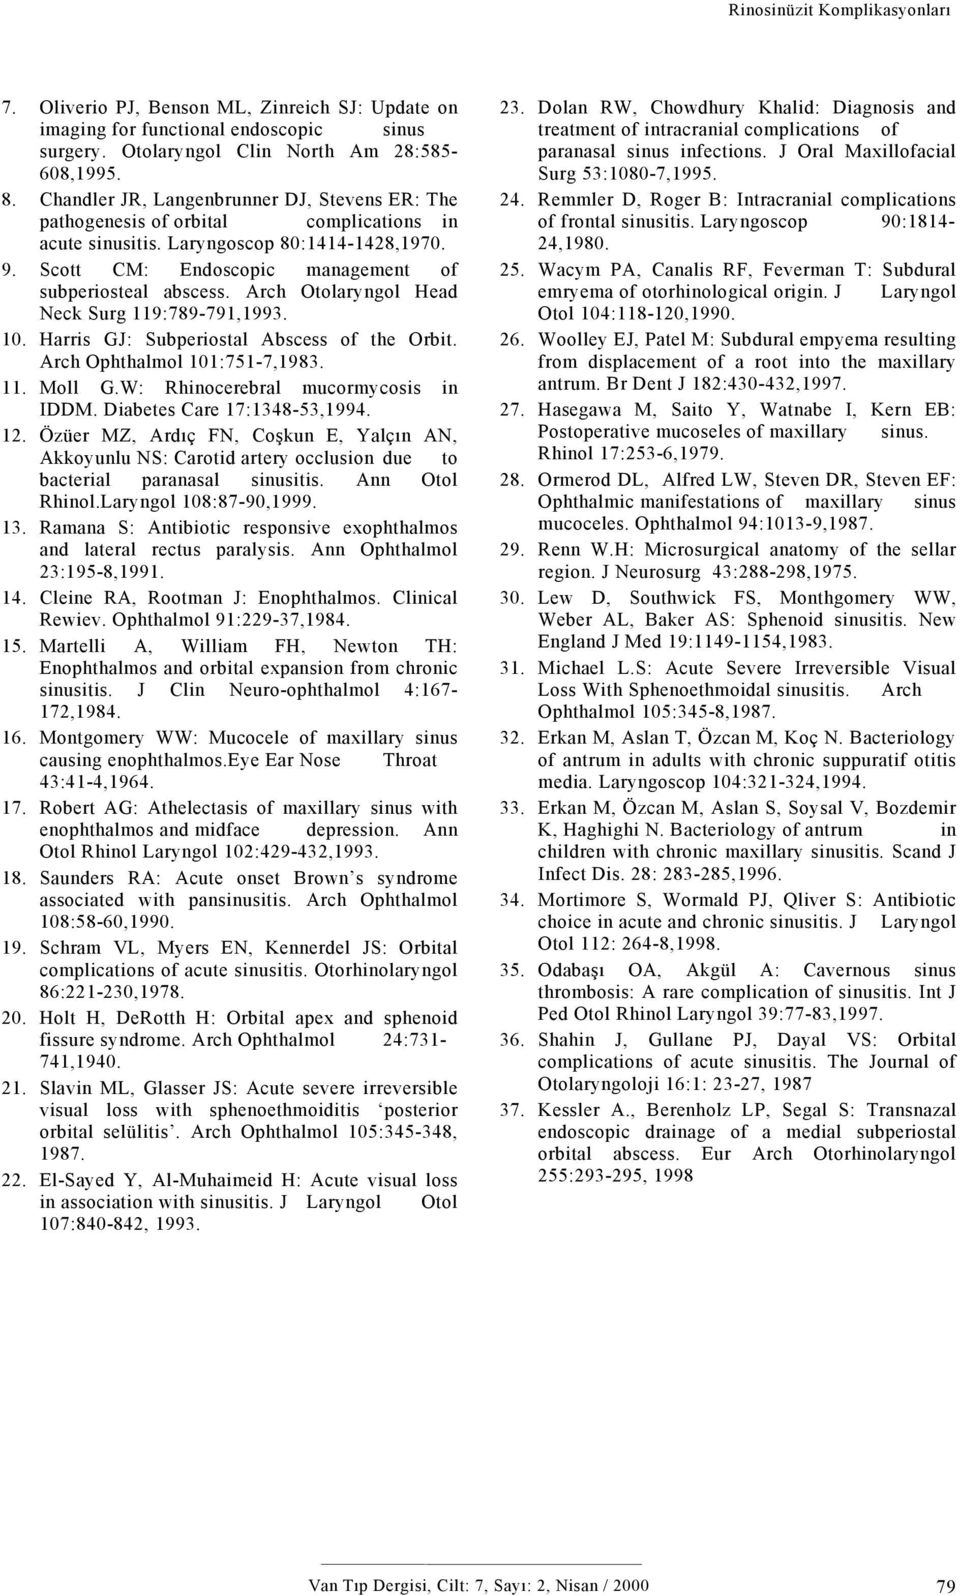 Arch Otolaryngol Head Neck Surg 119:789-791,1993. 10. Harris GJ: Subperiostal Abscess of the Orbit. Arch Ophthalmol 101:751-7,1983. 11. Moll G.W: Rhinocerebral mucormycosis in IDDM.